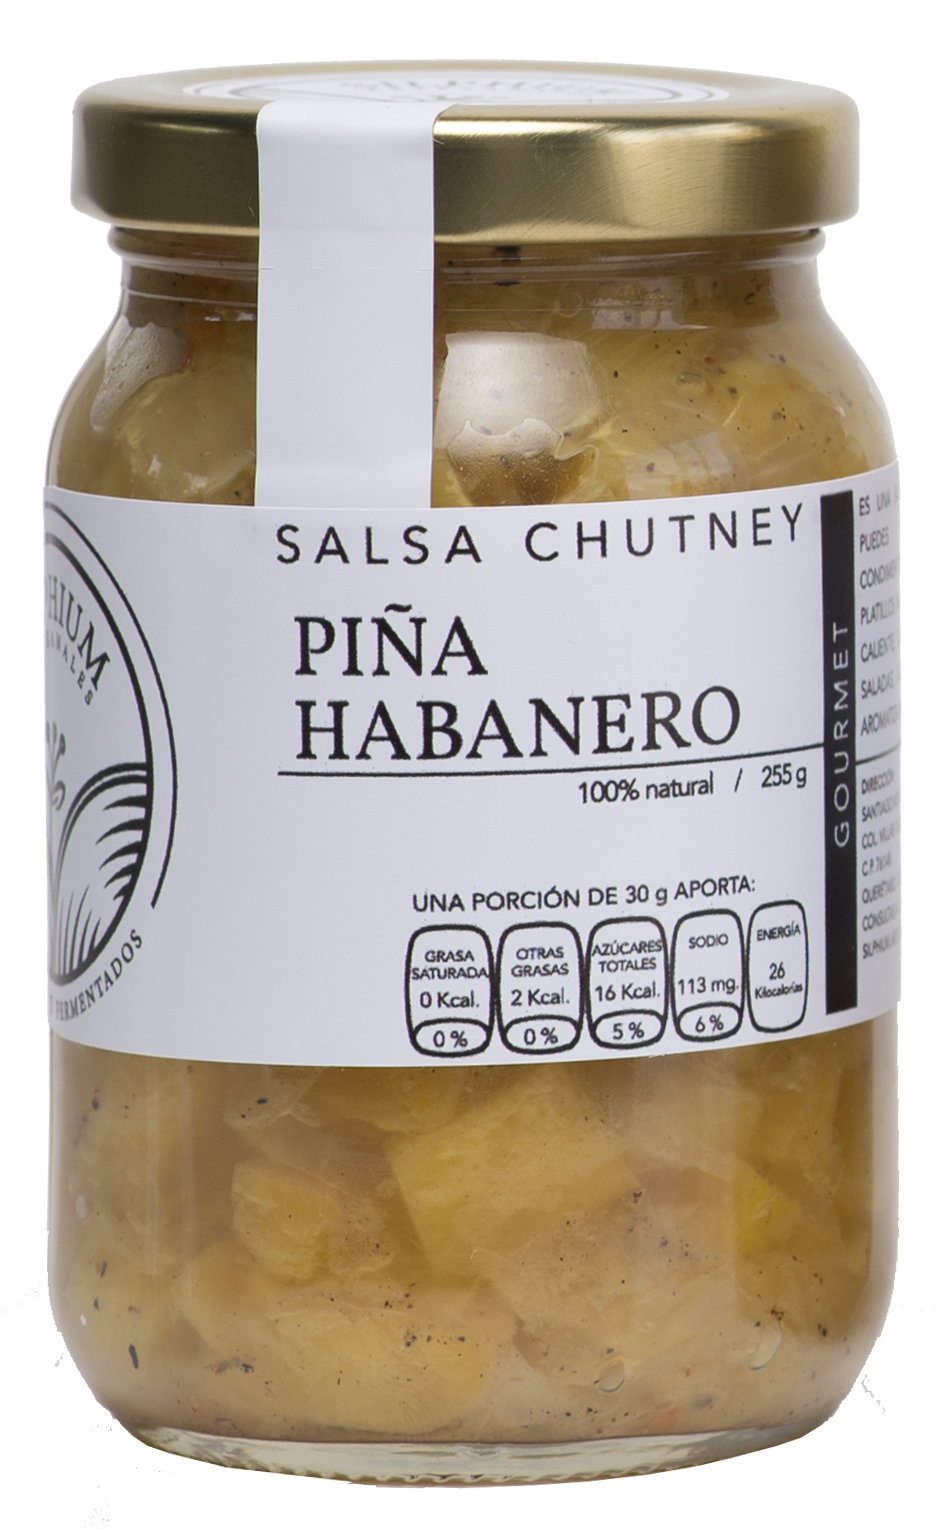 Salsa Chutney Piña Habanero (Silphium) 255 g